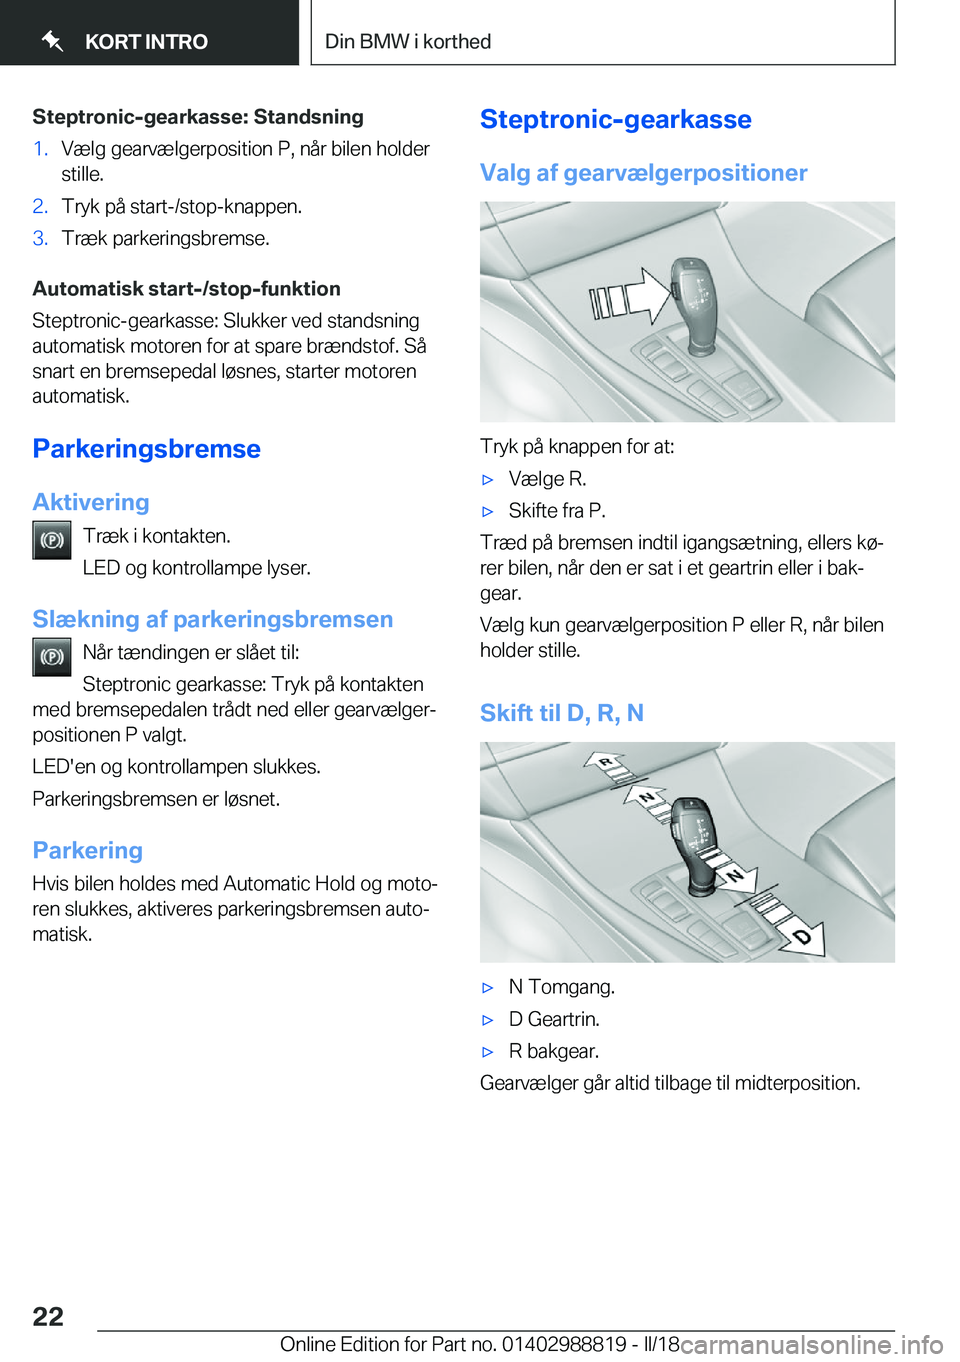 BMW X5 2018  InstruktionsbØger (in Danish) �S�t�e�p�t�r�o�n�i�c�-�g�e�a�r�k�a�s�s�e�:��S�t�a�n�d�s�n�i�n�g�1�.�V�æ�l�g� �g�e�a�r�v�æ�l�g�e�r�p�o�s�i�t�i�o�n� �P�,� �n�å�r� �b�i�l�e�n� �h�o�l�d�e�r�s�t�i�l�l�e�.�2�.�T�r�y�k� �p�å� �s�t�a�r